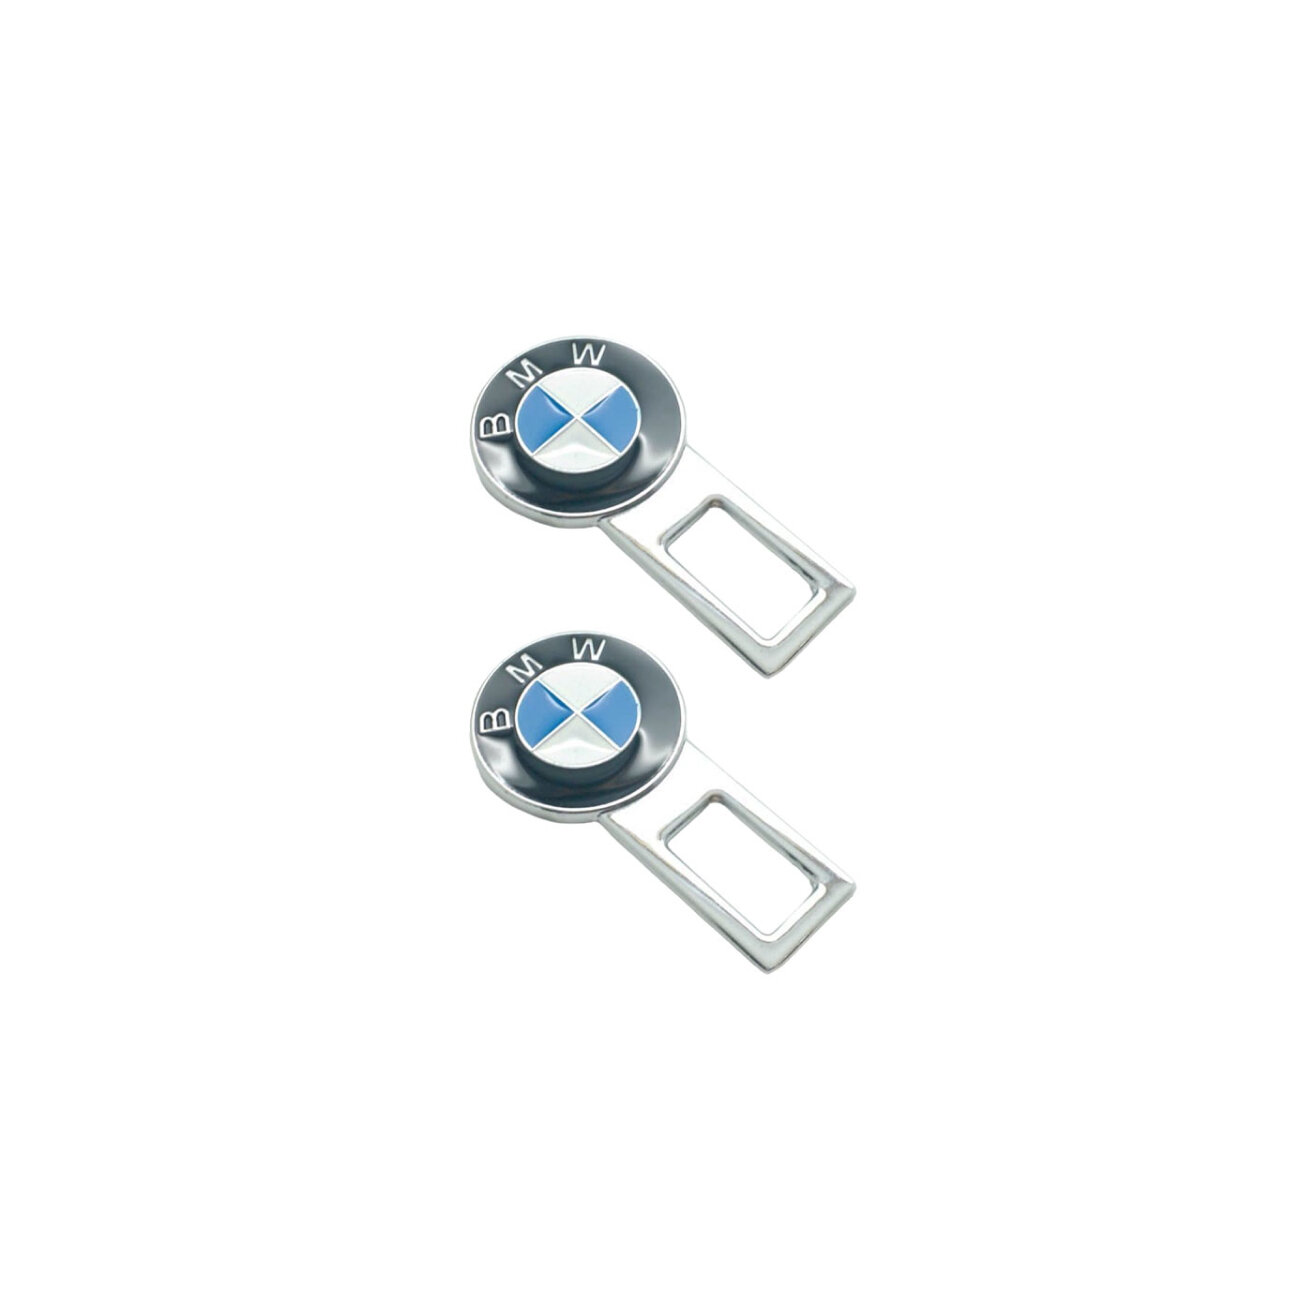 Комплект: заглушка ремня безопасности BMW classic 2 шт.